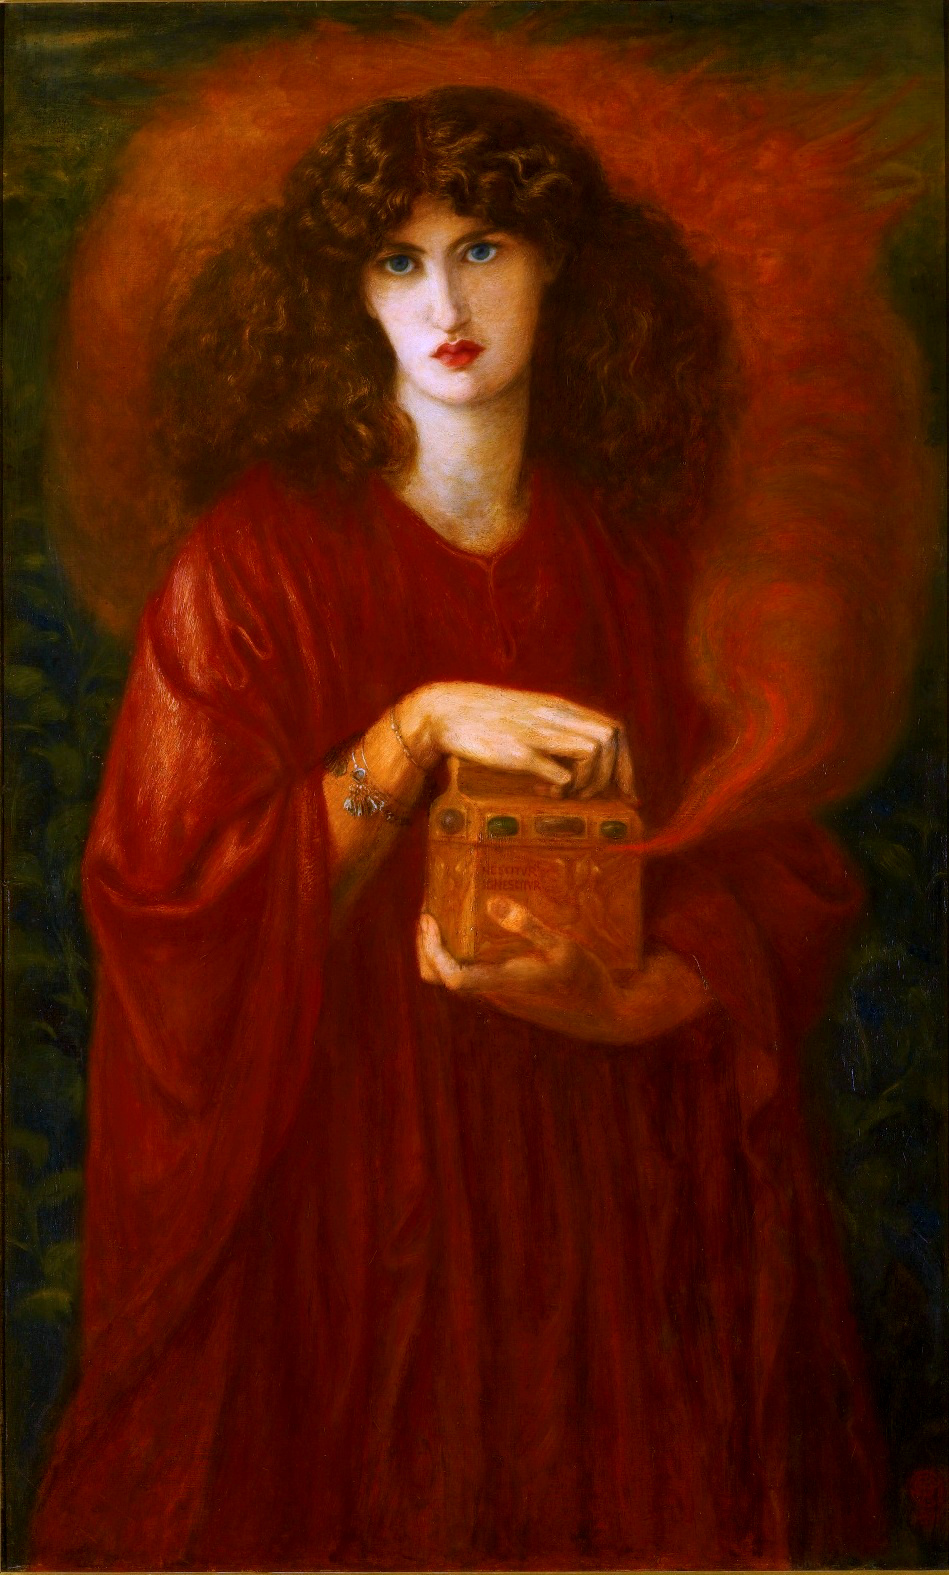 Pandora by Dante Gabriel Rossetti - 1871